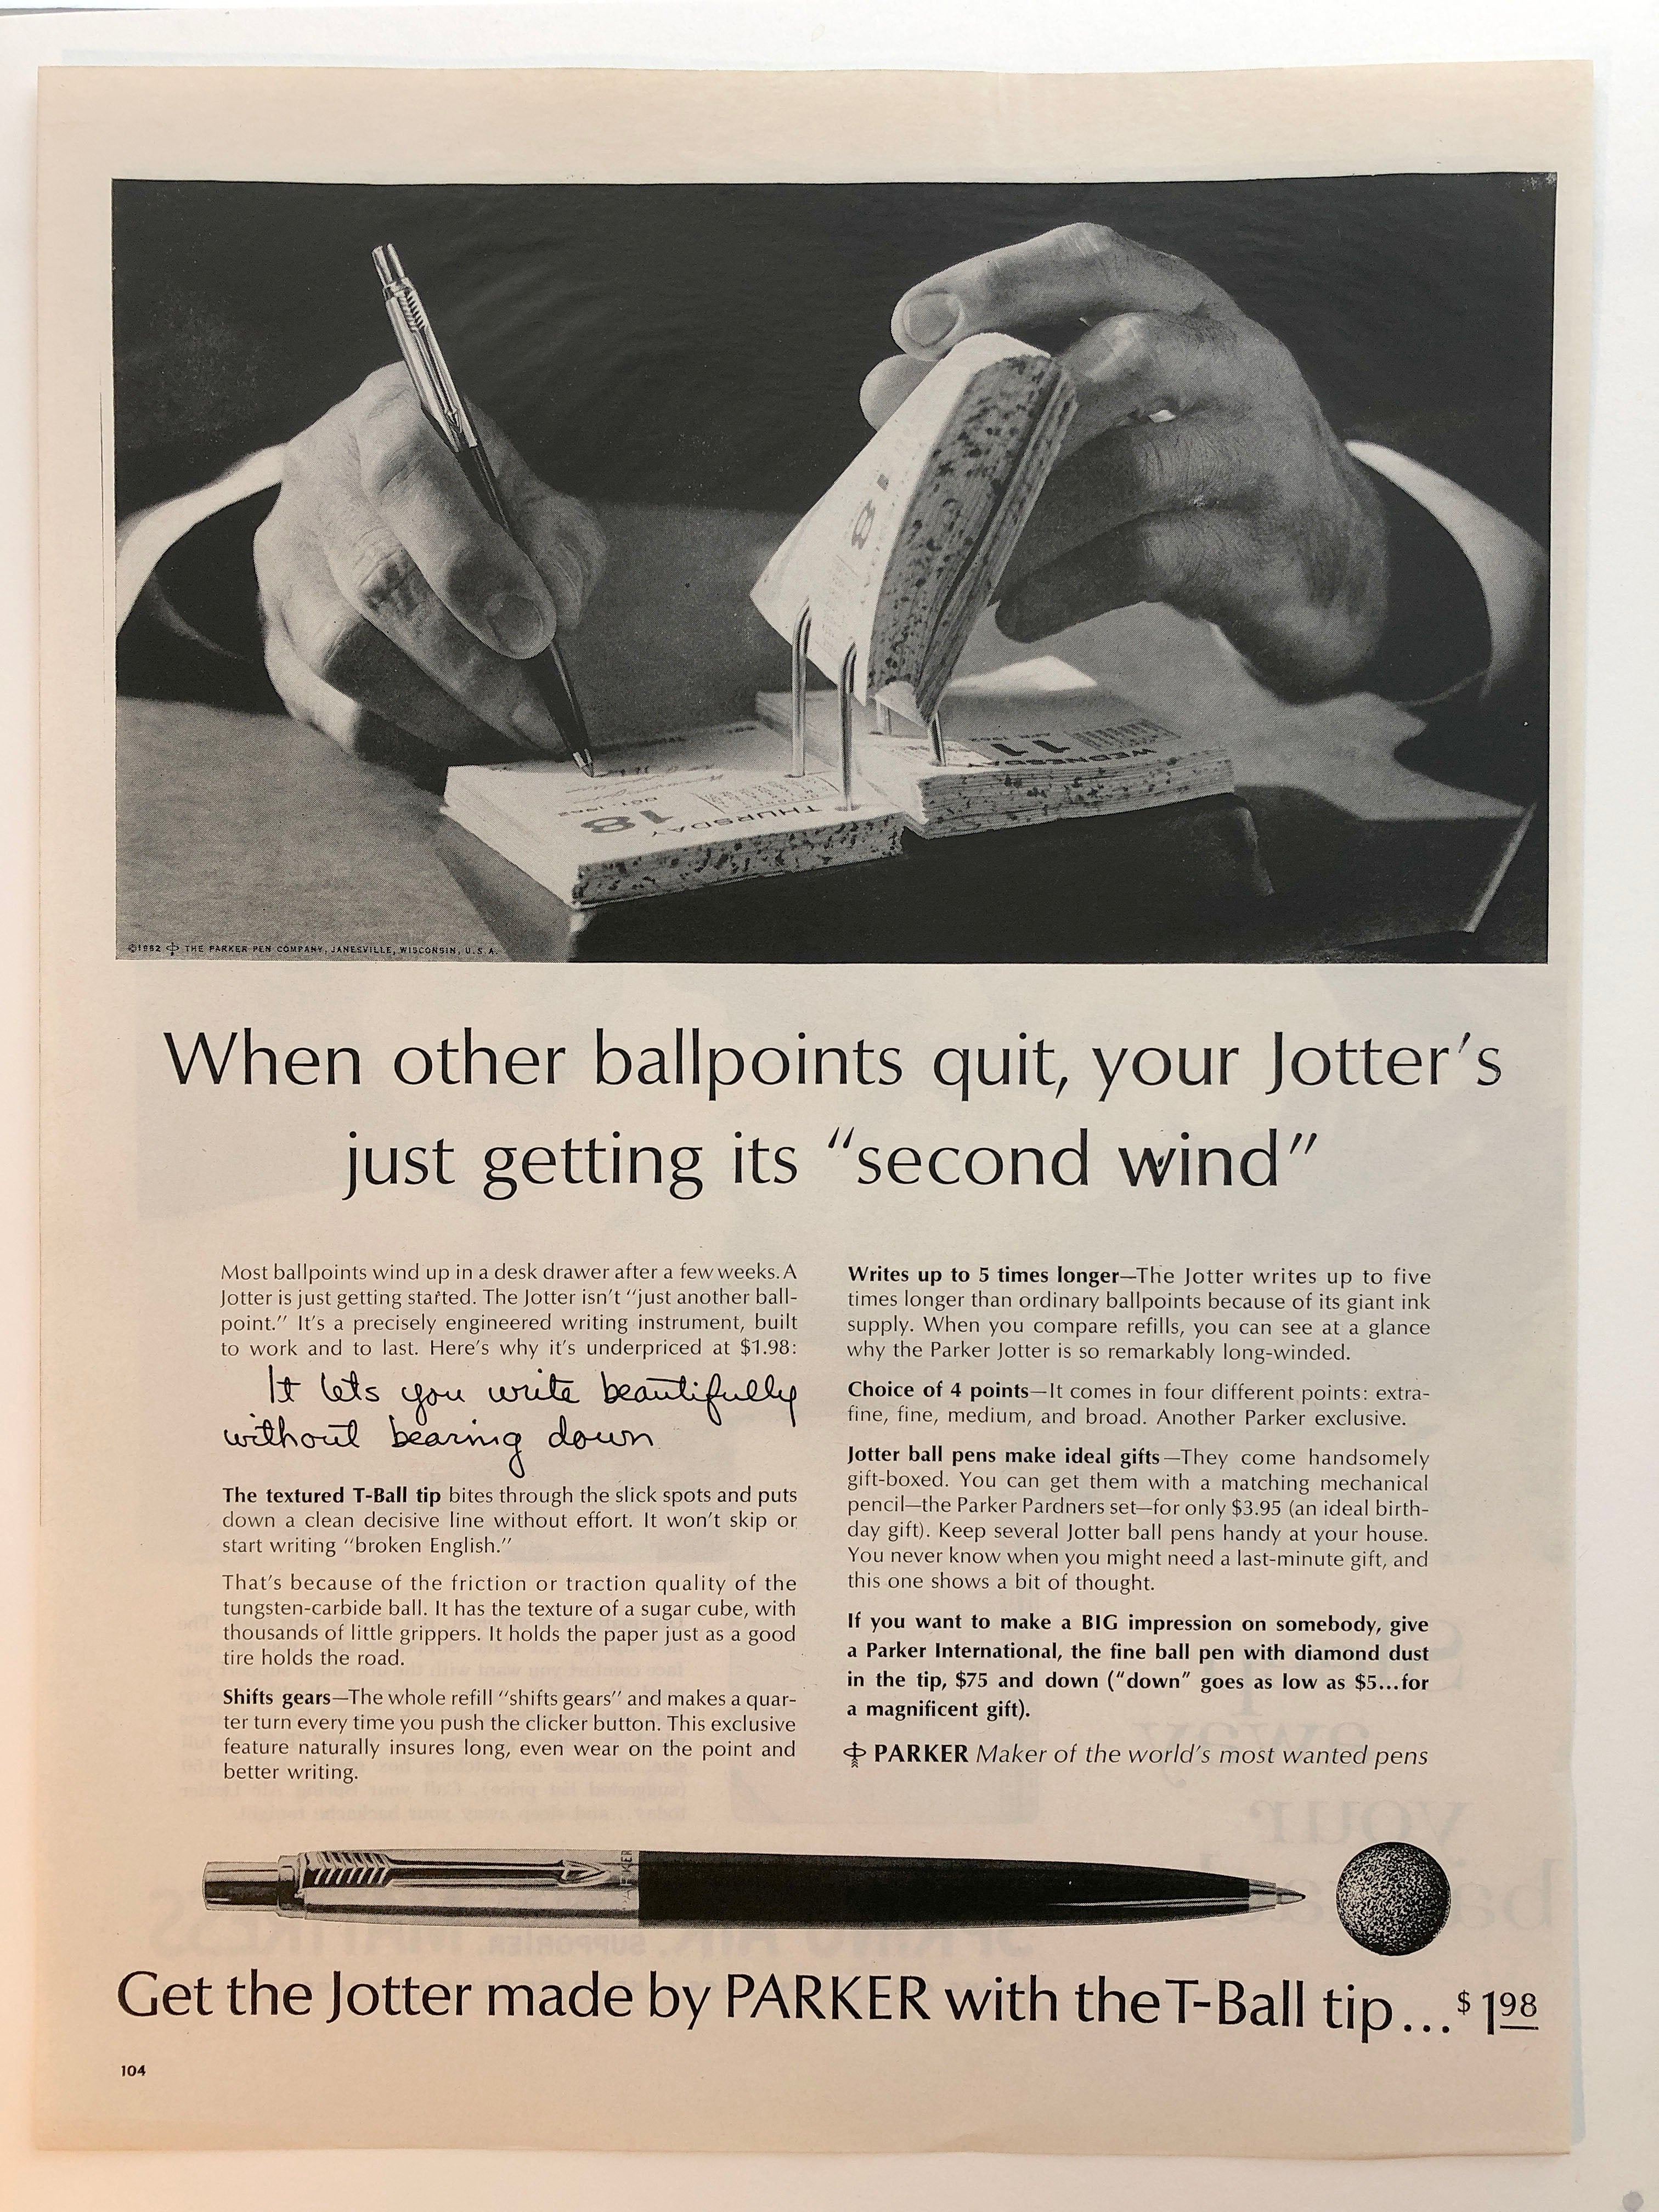 Parker Jotter Ballpoint - Perpetual Calendar, Boeing Advertising